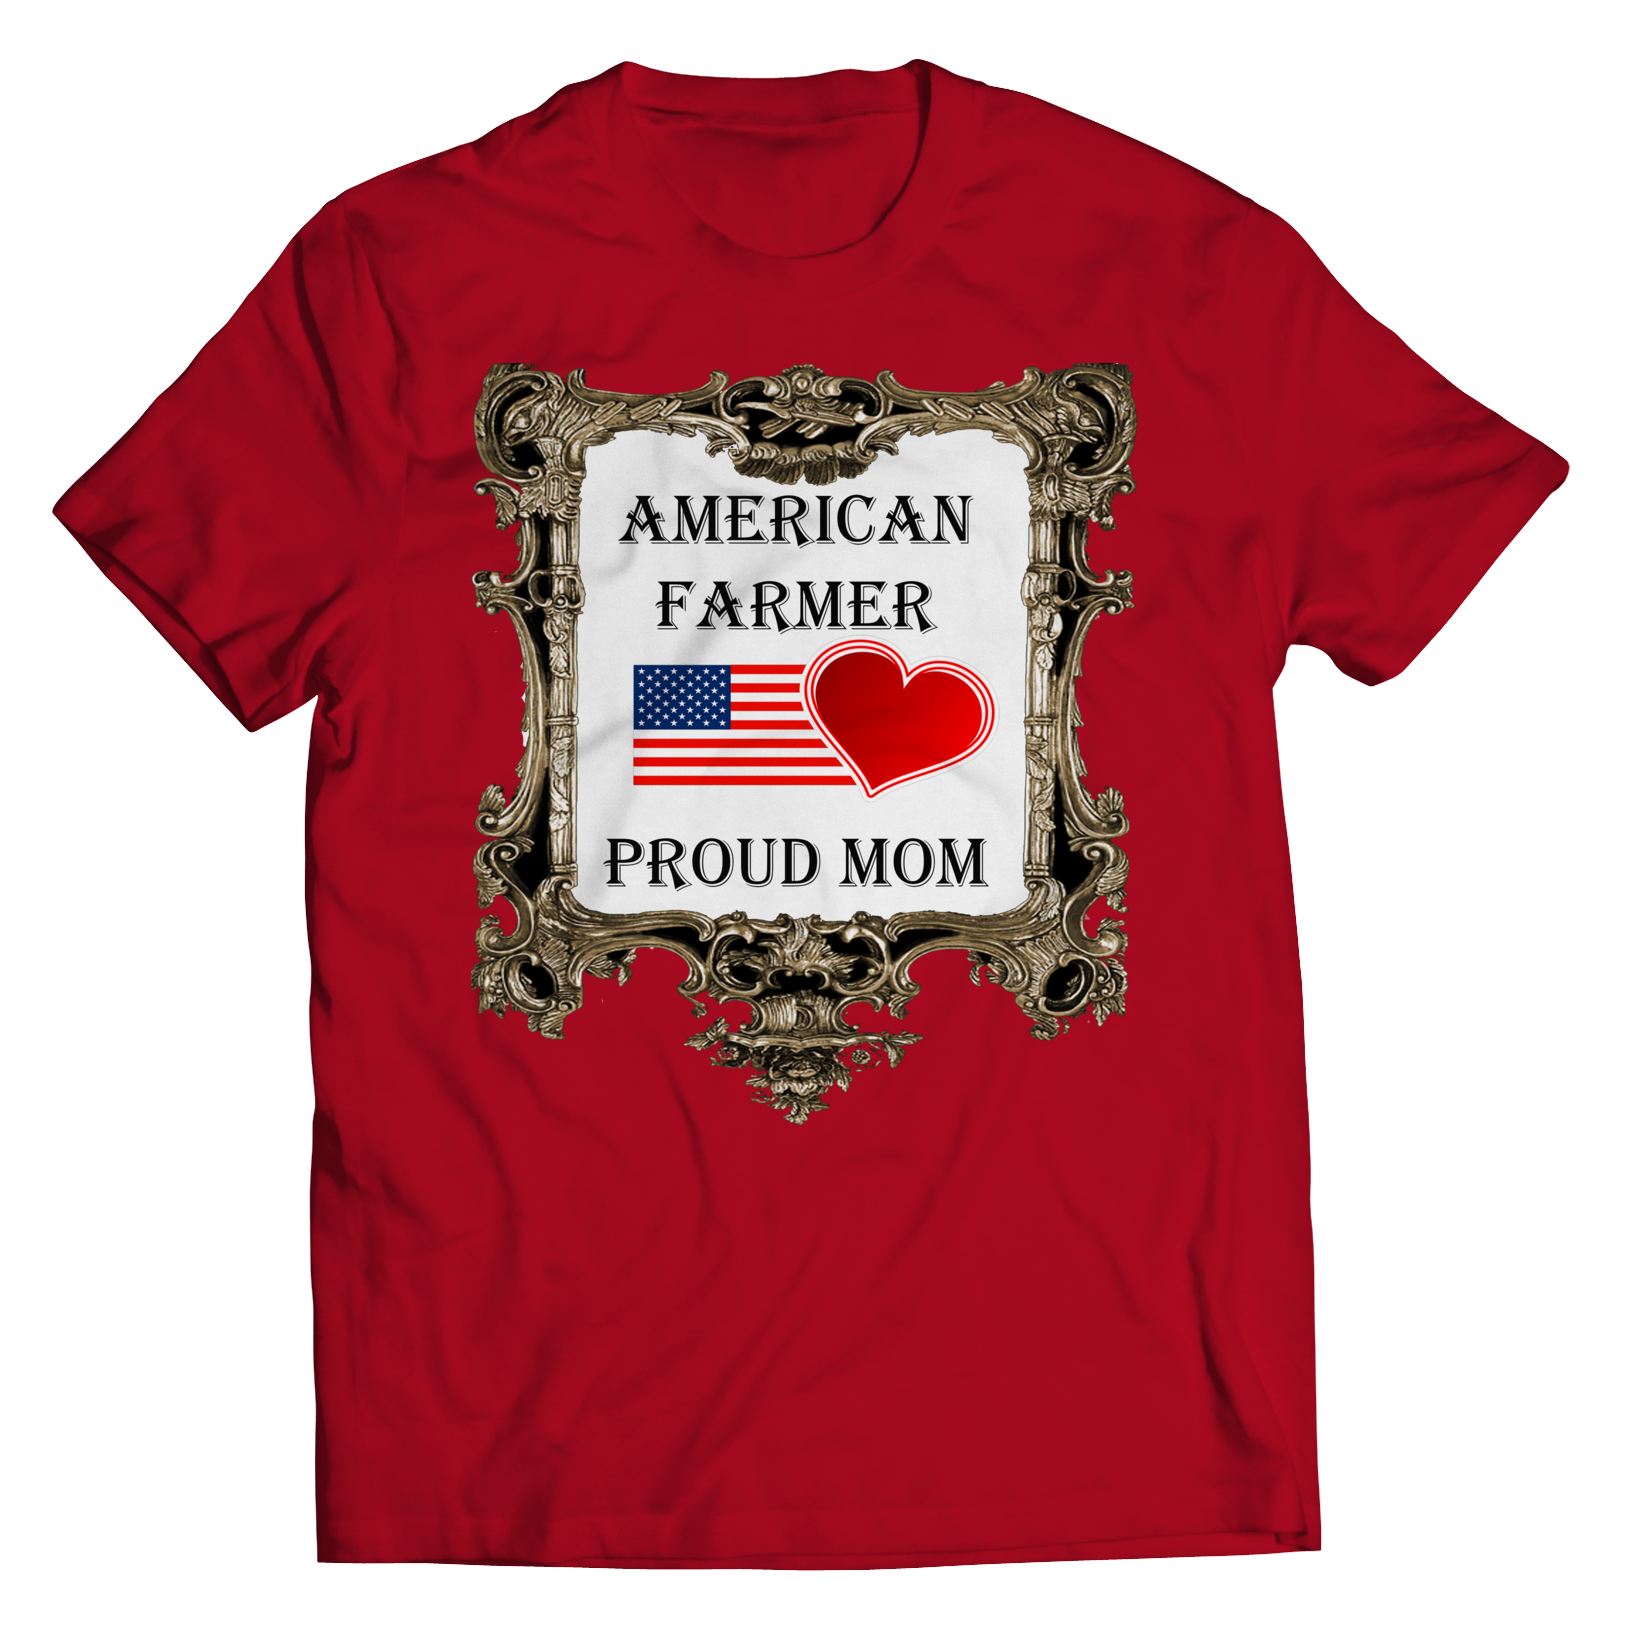 American Farmer - Proud Mom Shirt